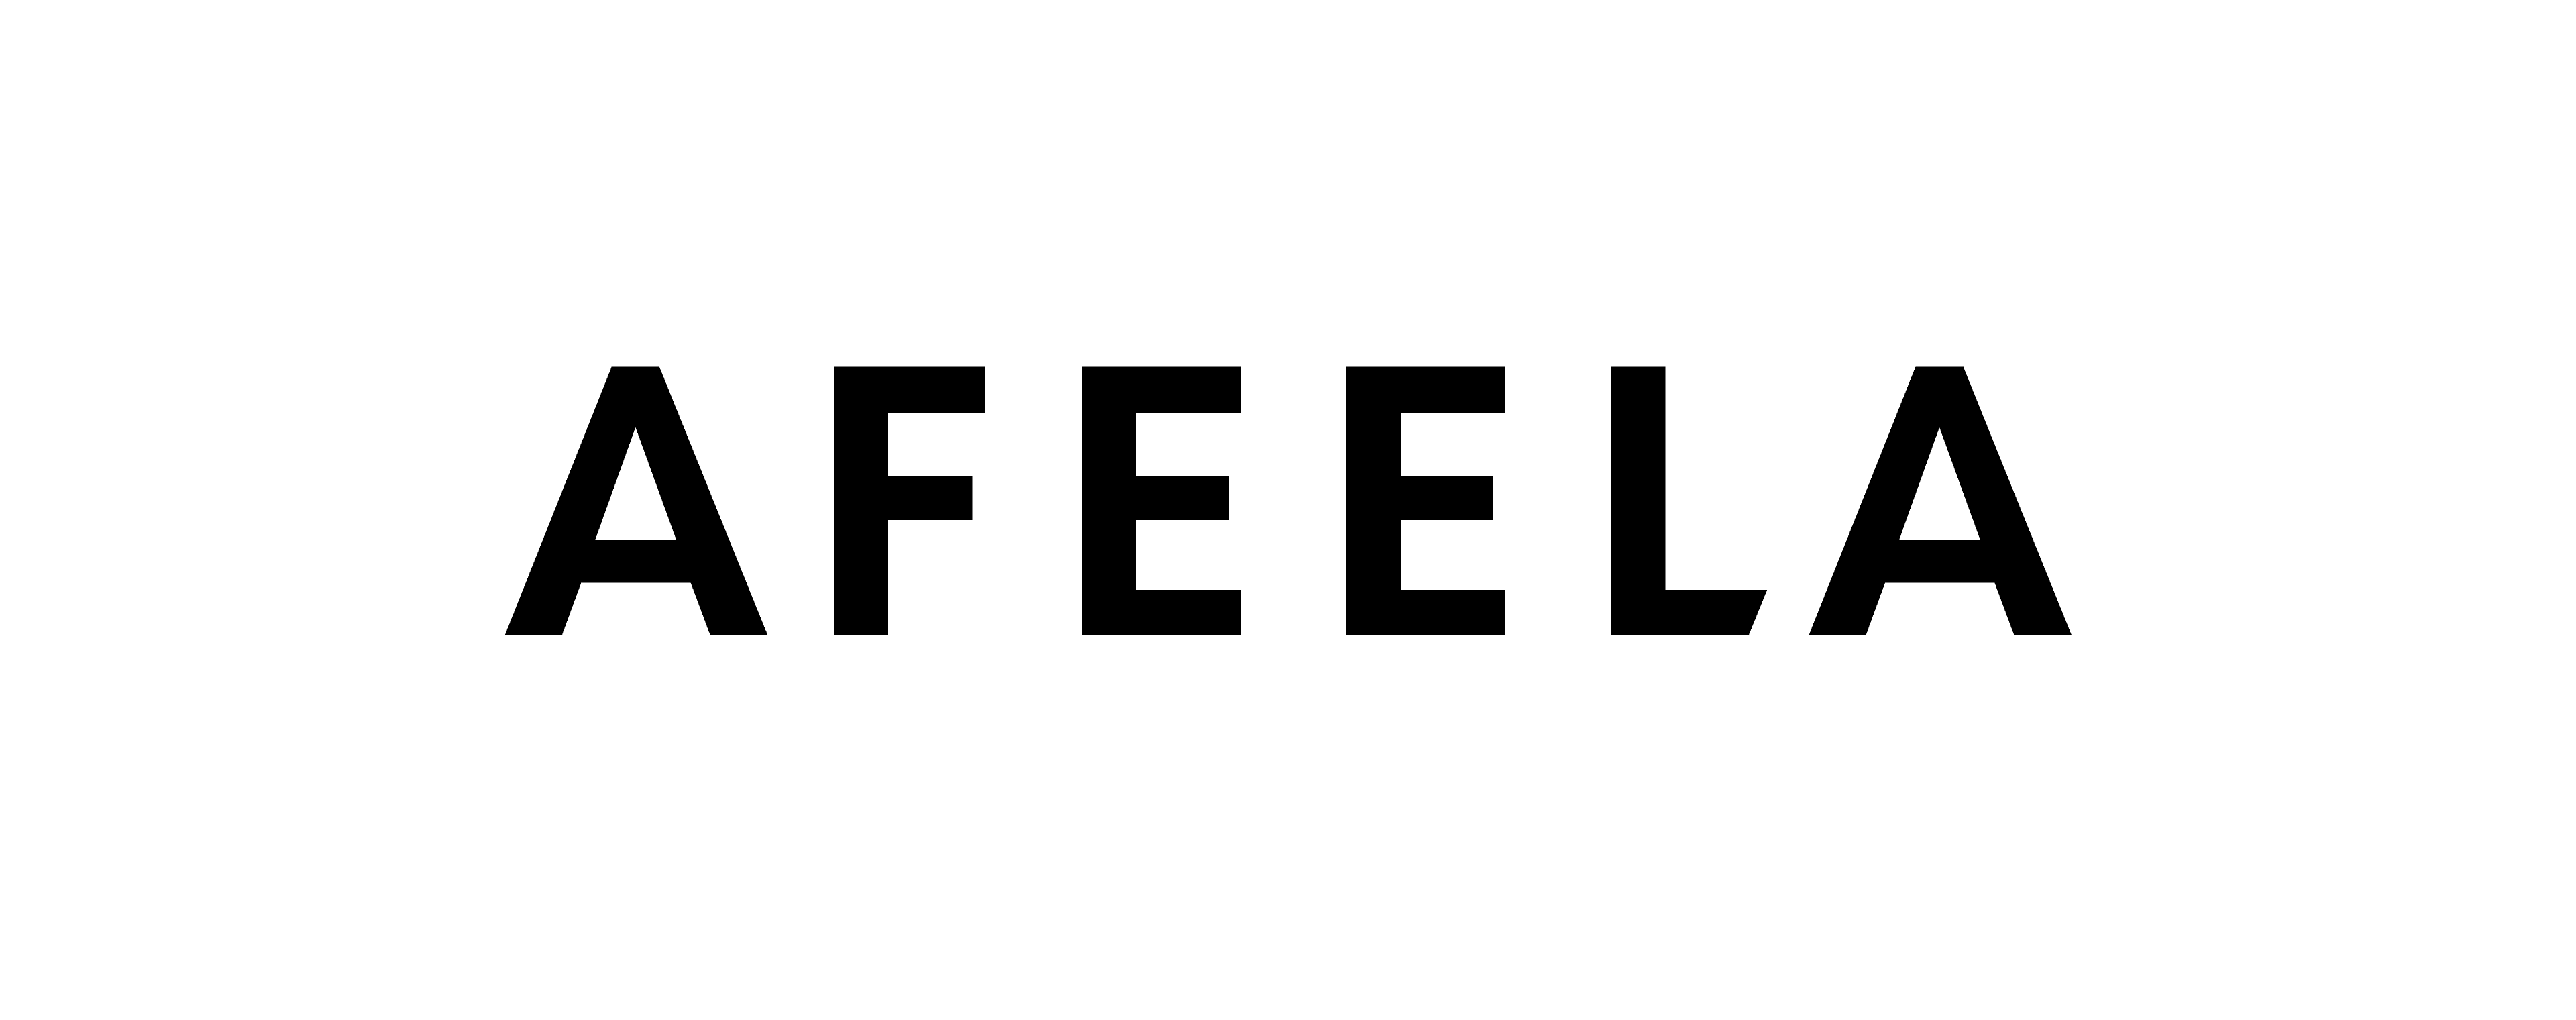 New Brand "AFEELA"